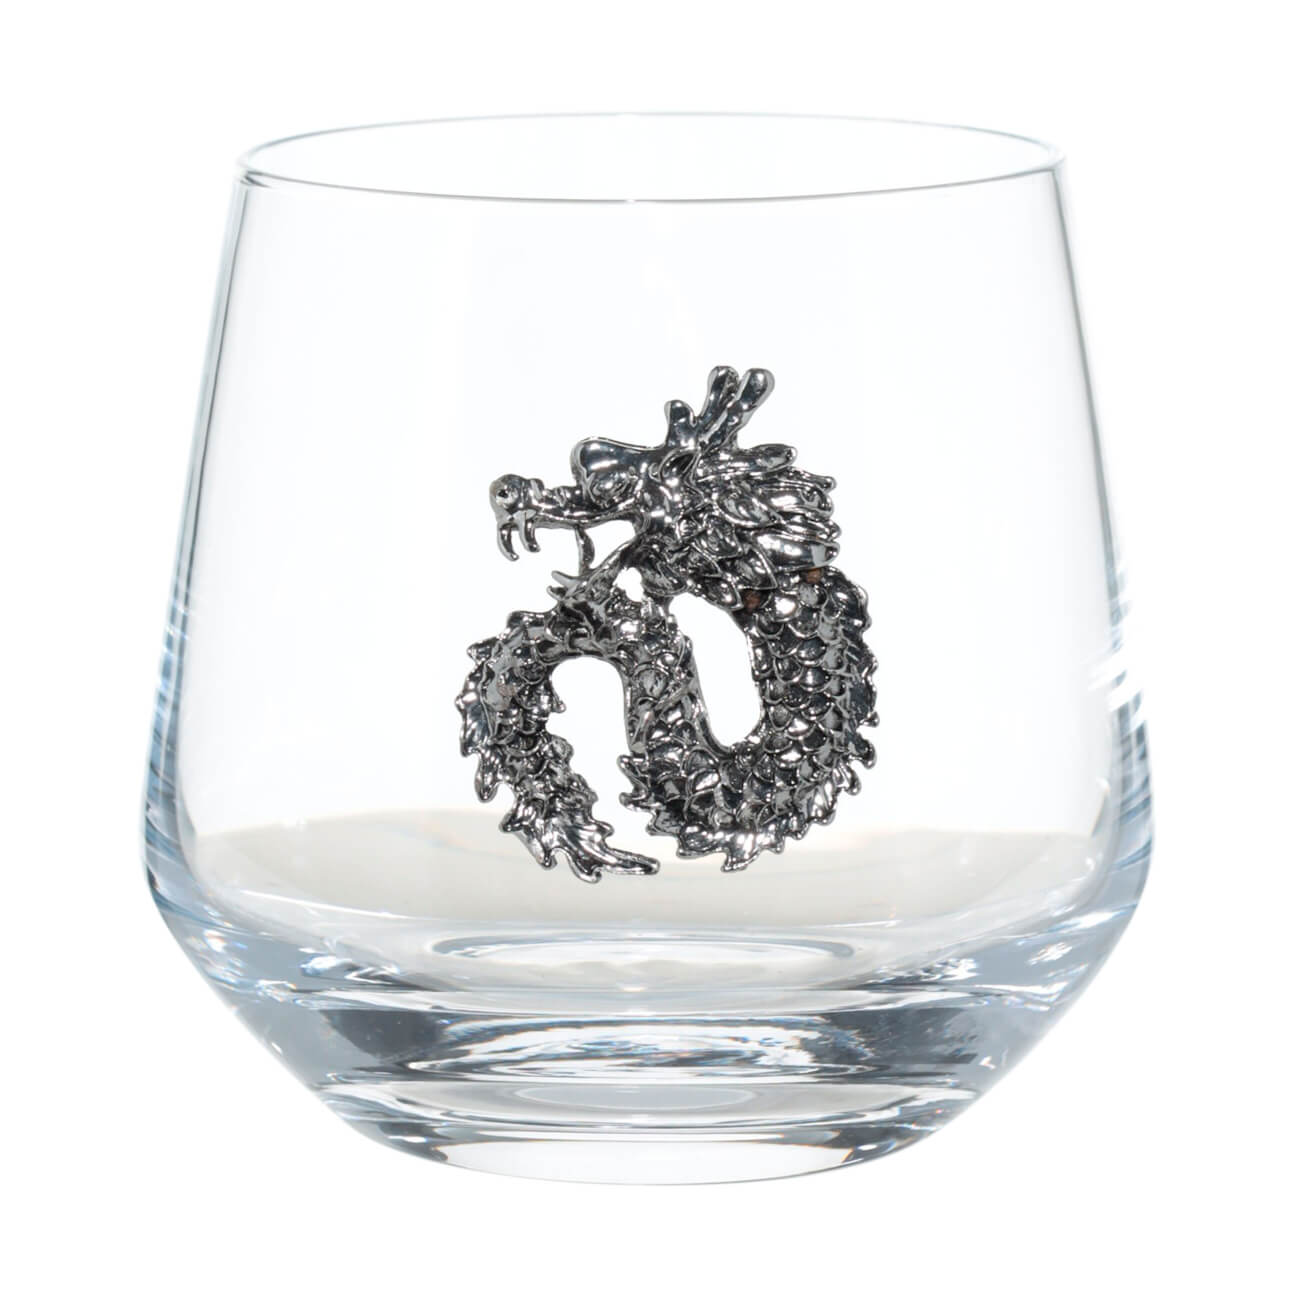 Стакан для виски, 370 мл, стекло/металл, Серебристый дракон, Lux elements бокал для виски 360 мл стекло pasabahce casablanca 52704 sl